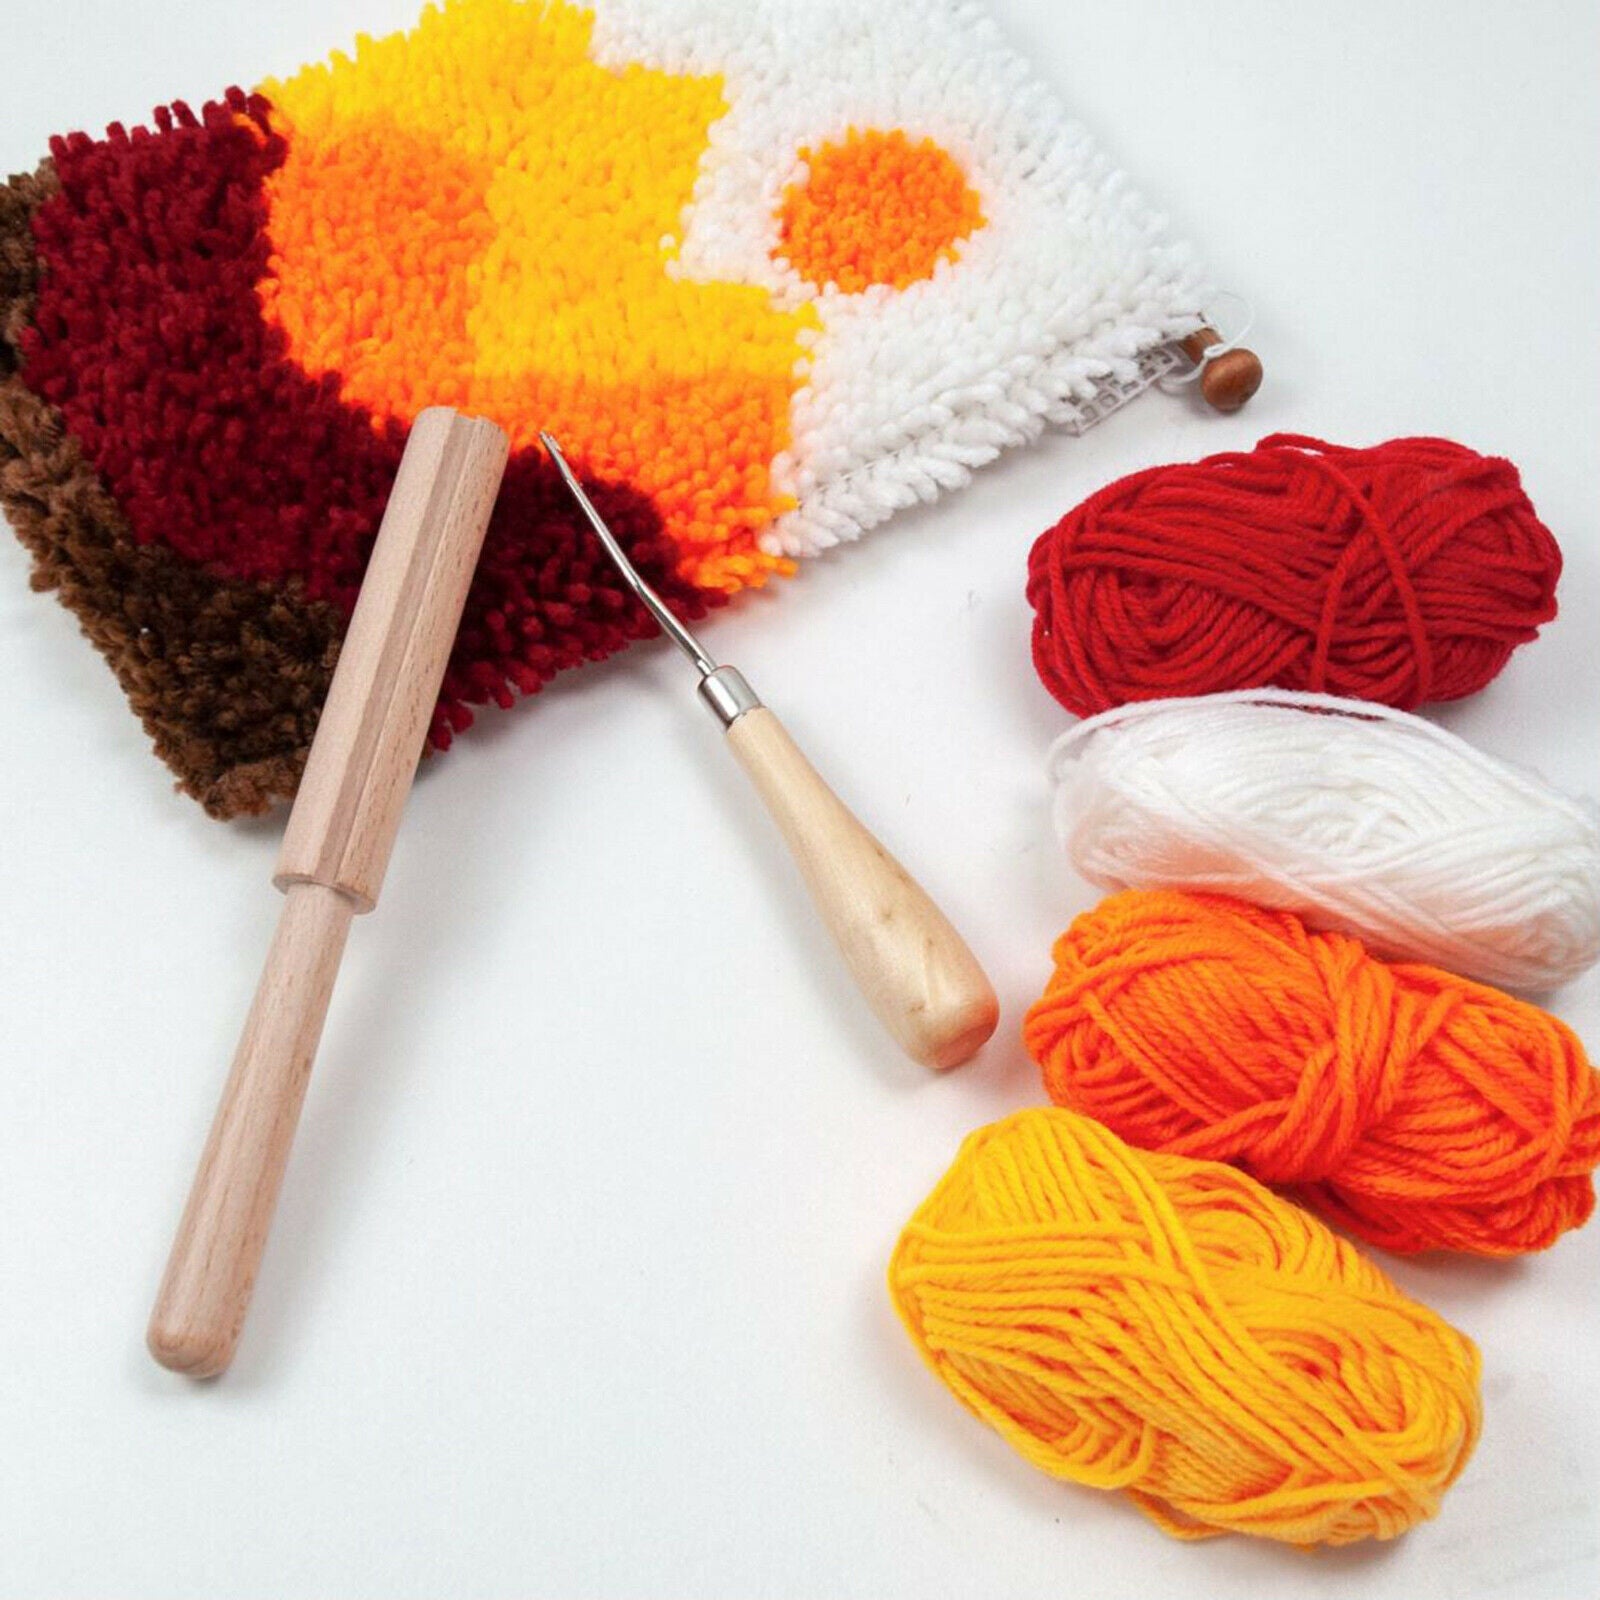 Latch Hook Rug Yarn Kits Supplies Knitting Sewing Crochet Accessories Kit